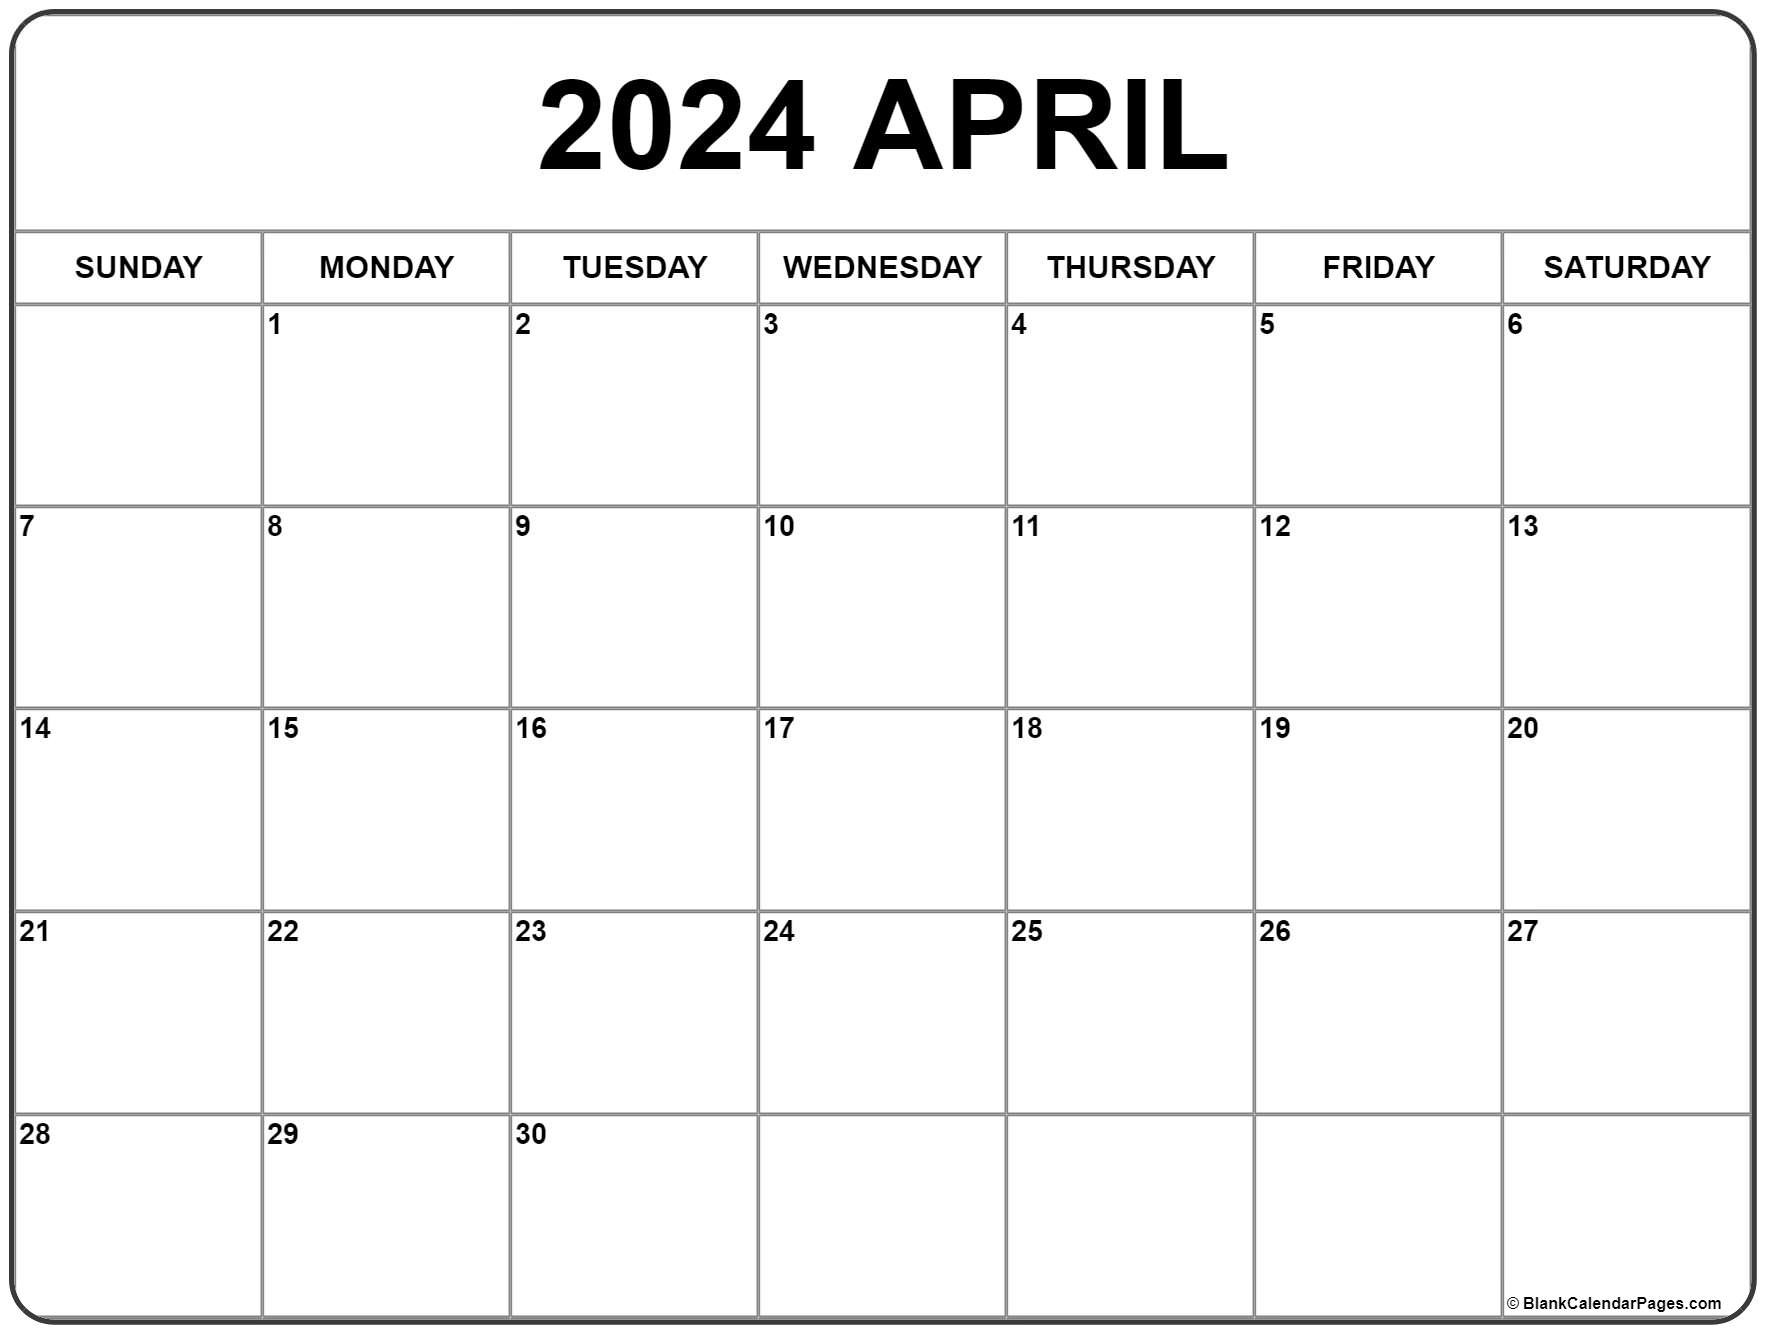 April 2024 calendar. free printable calendar